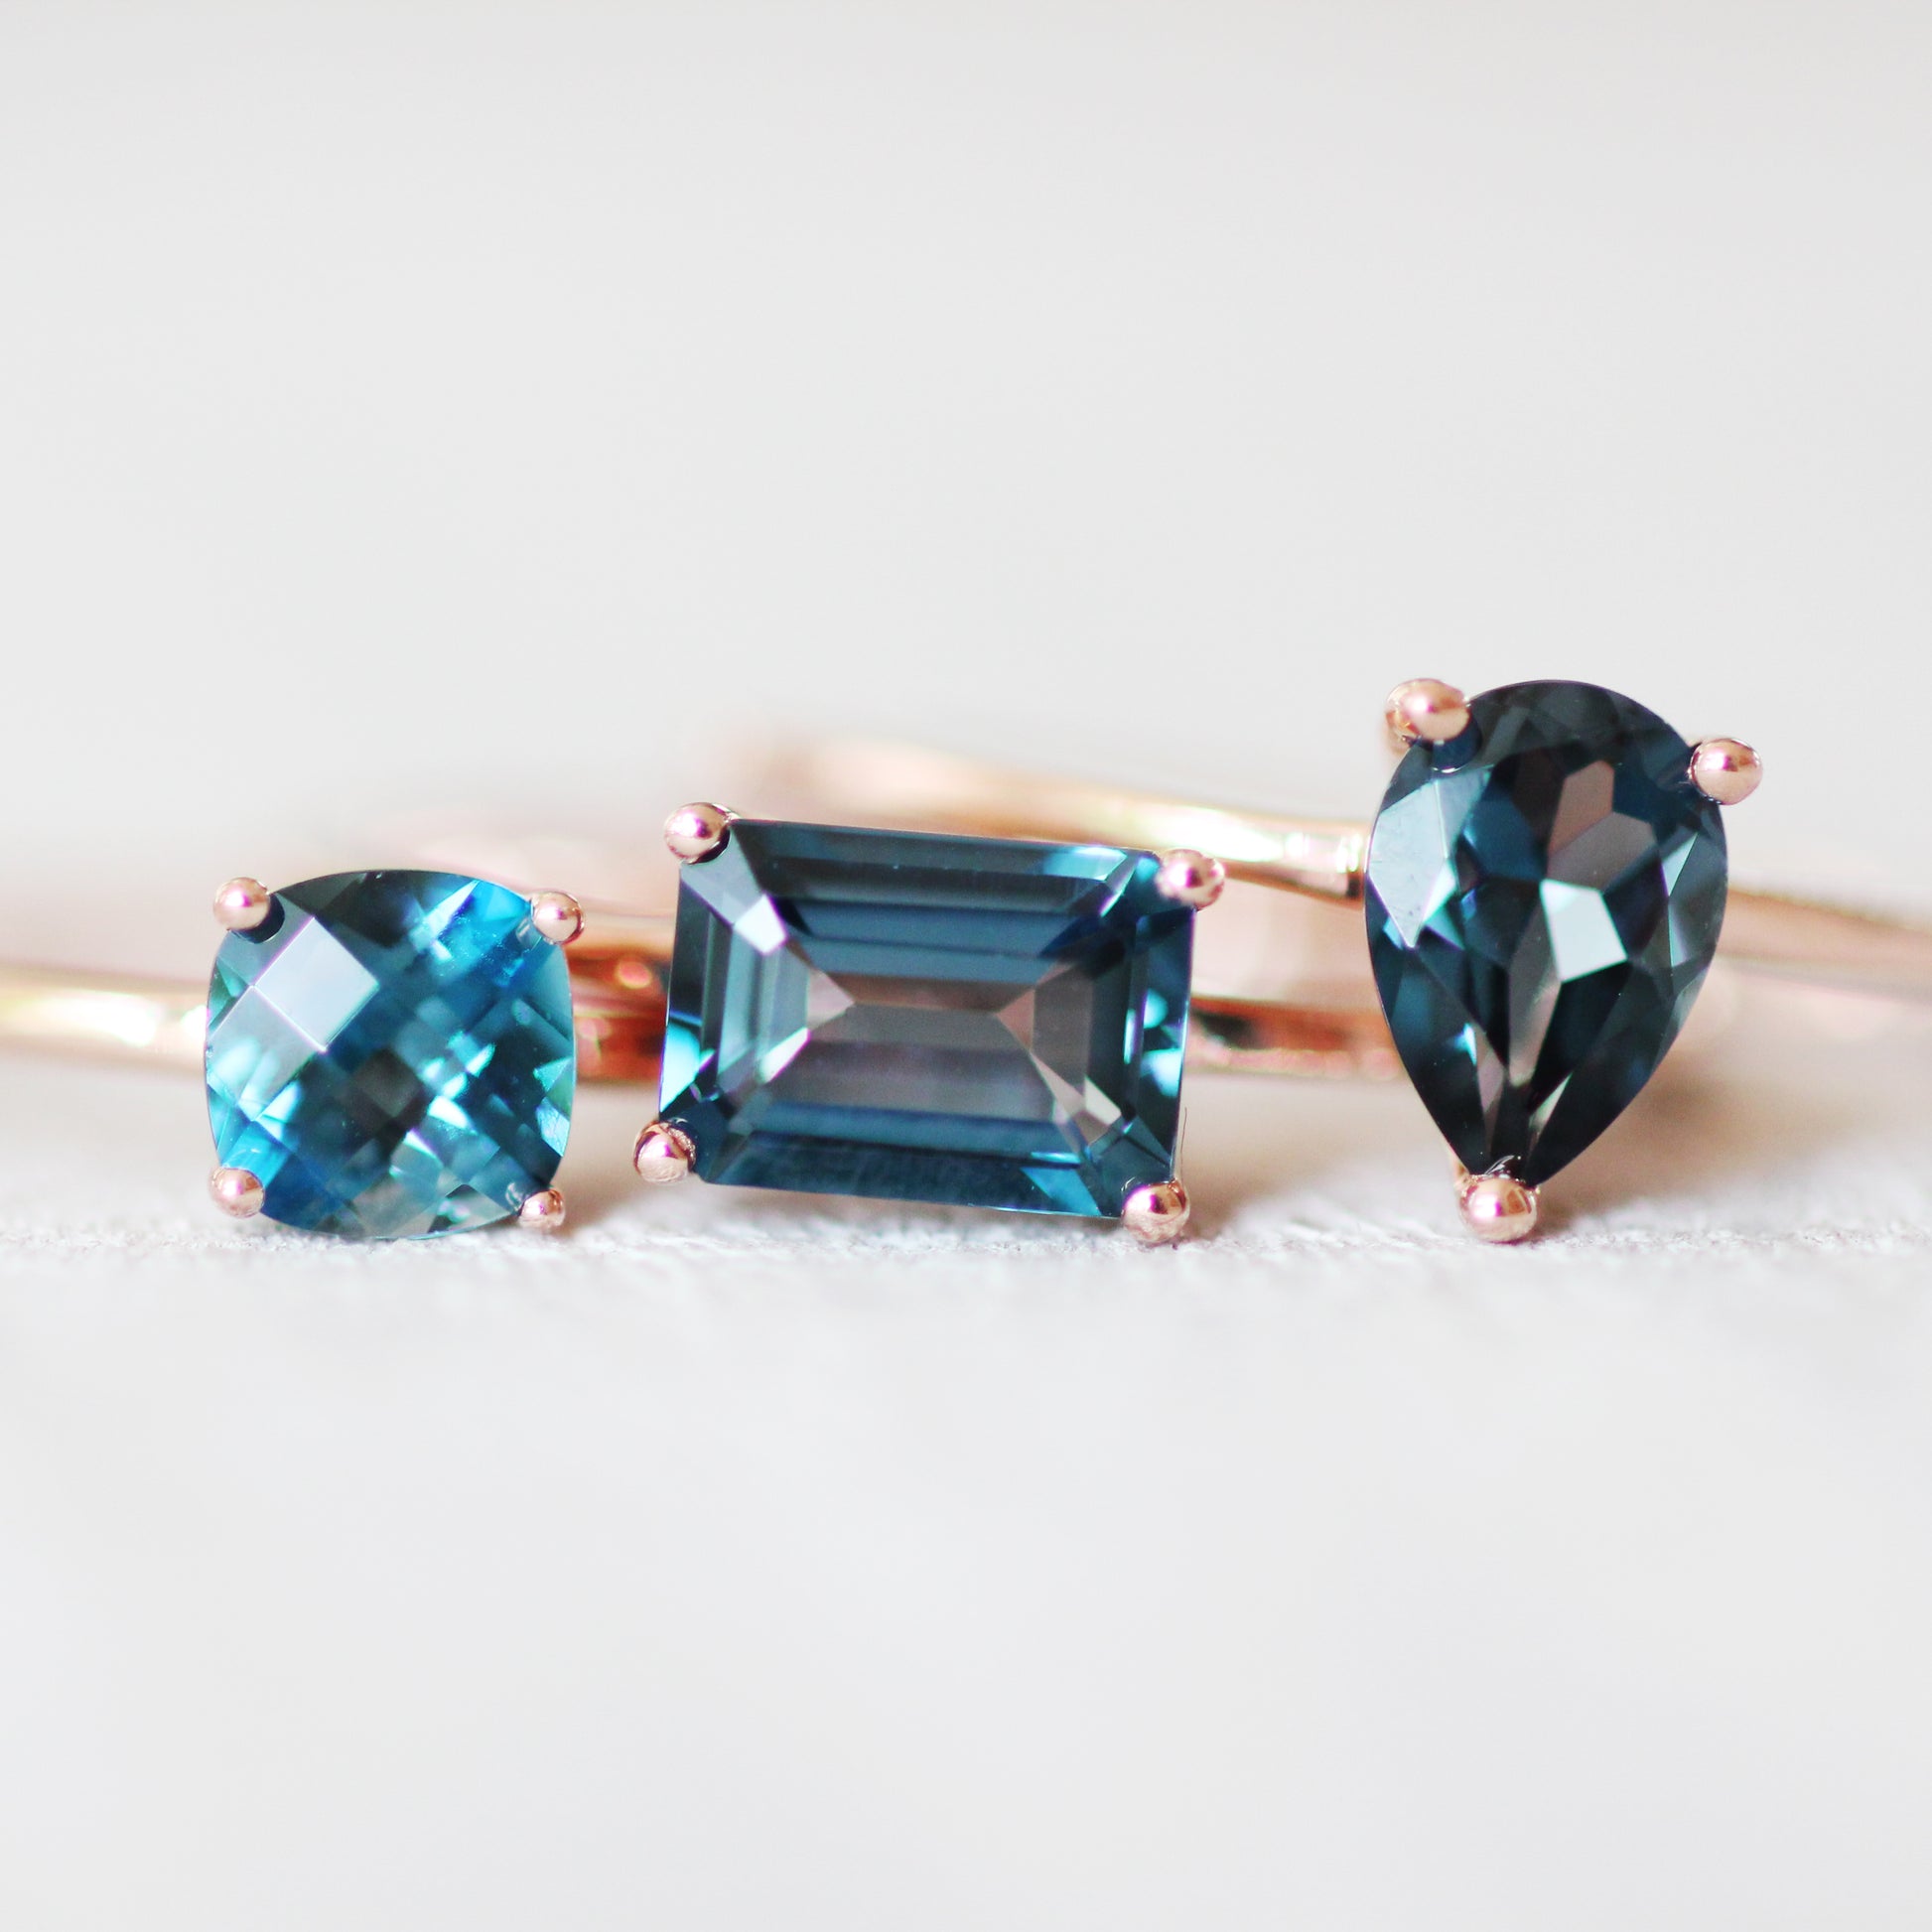 London Blue Topaz 1.3 carat Emerald Cut - Your choice of metal - Custom - Midwinter Co. Alternative Bridal Rings and Modern Fine Jewelry